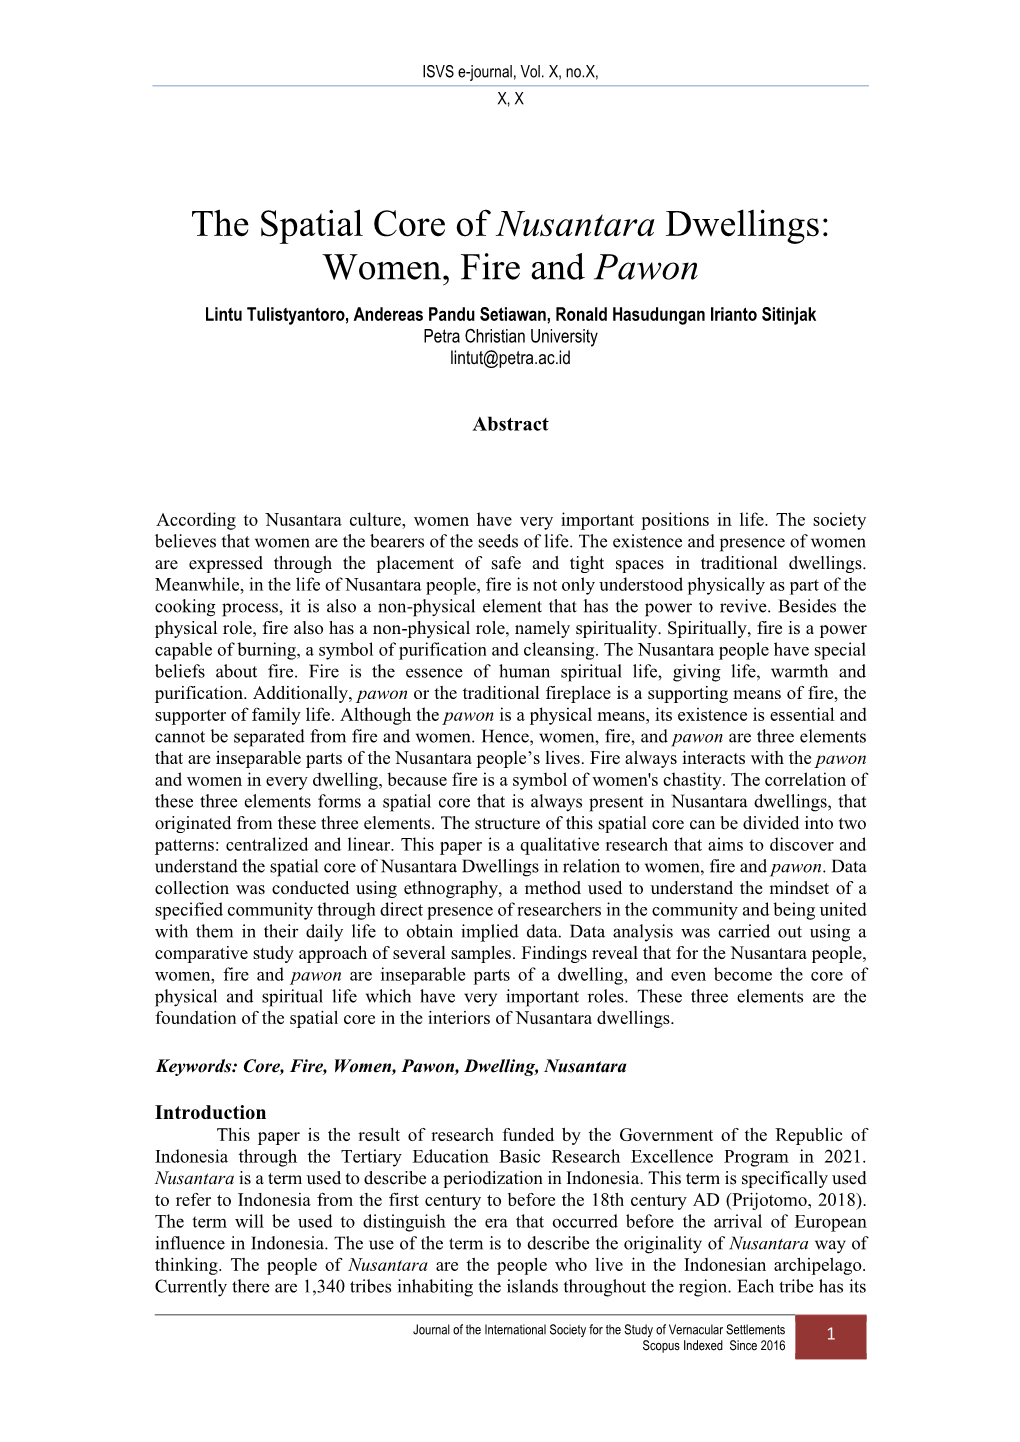 The Spatial Core of Nusantara Dwellings: Women, Fire and Pawon